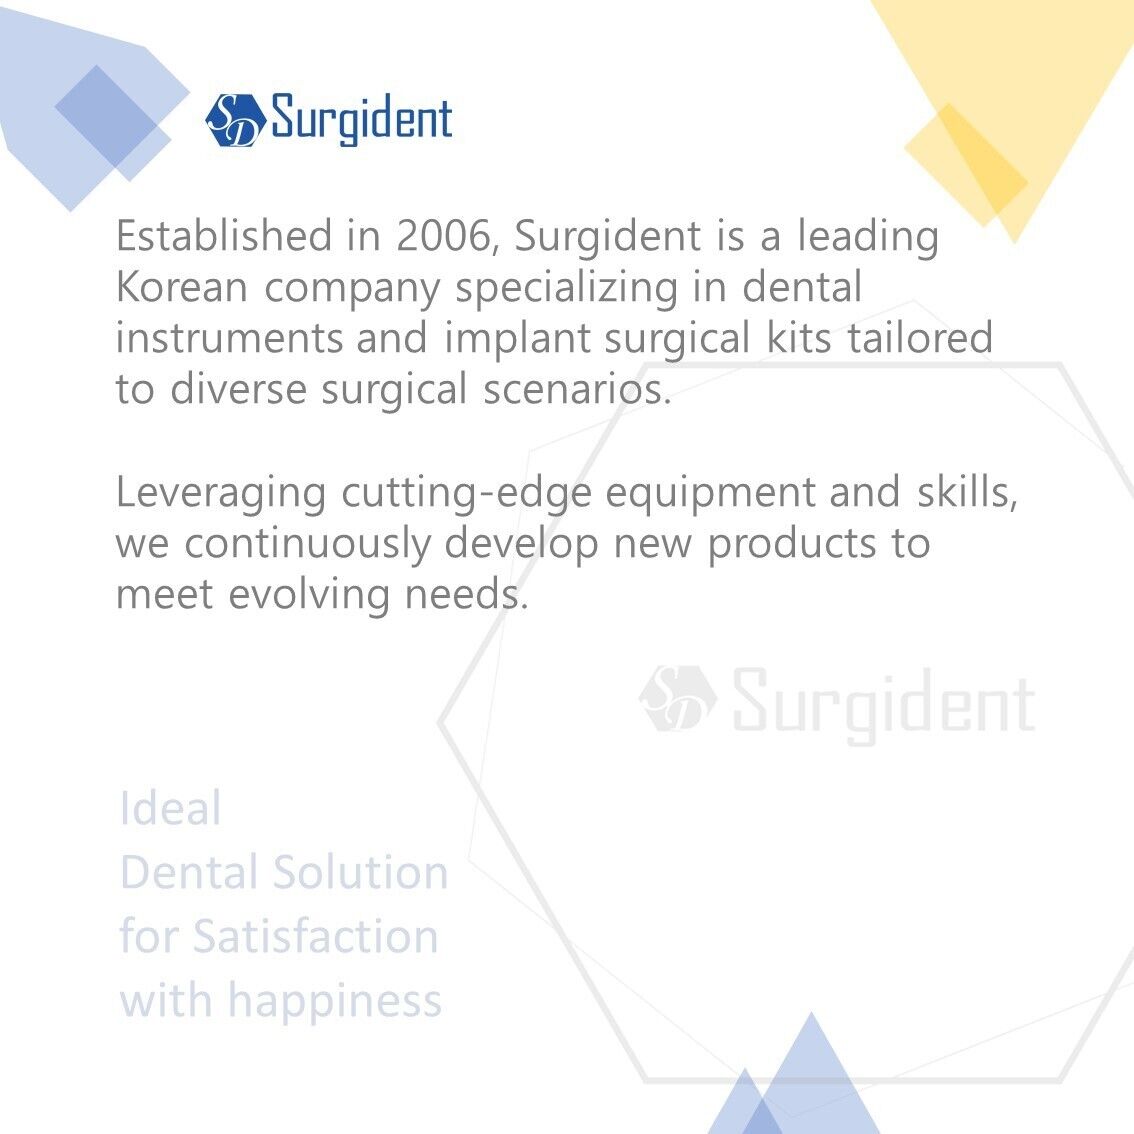 Surgident Endodontic Explorer Dental Instrument